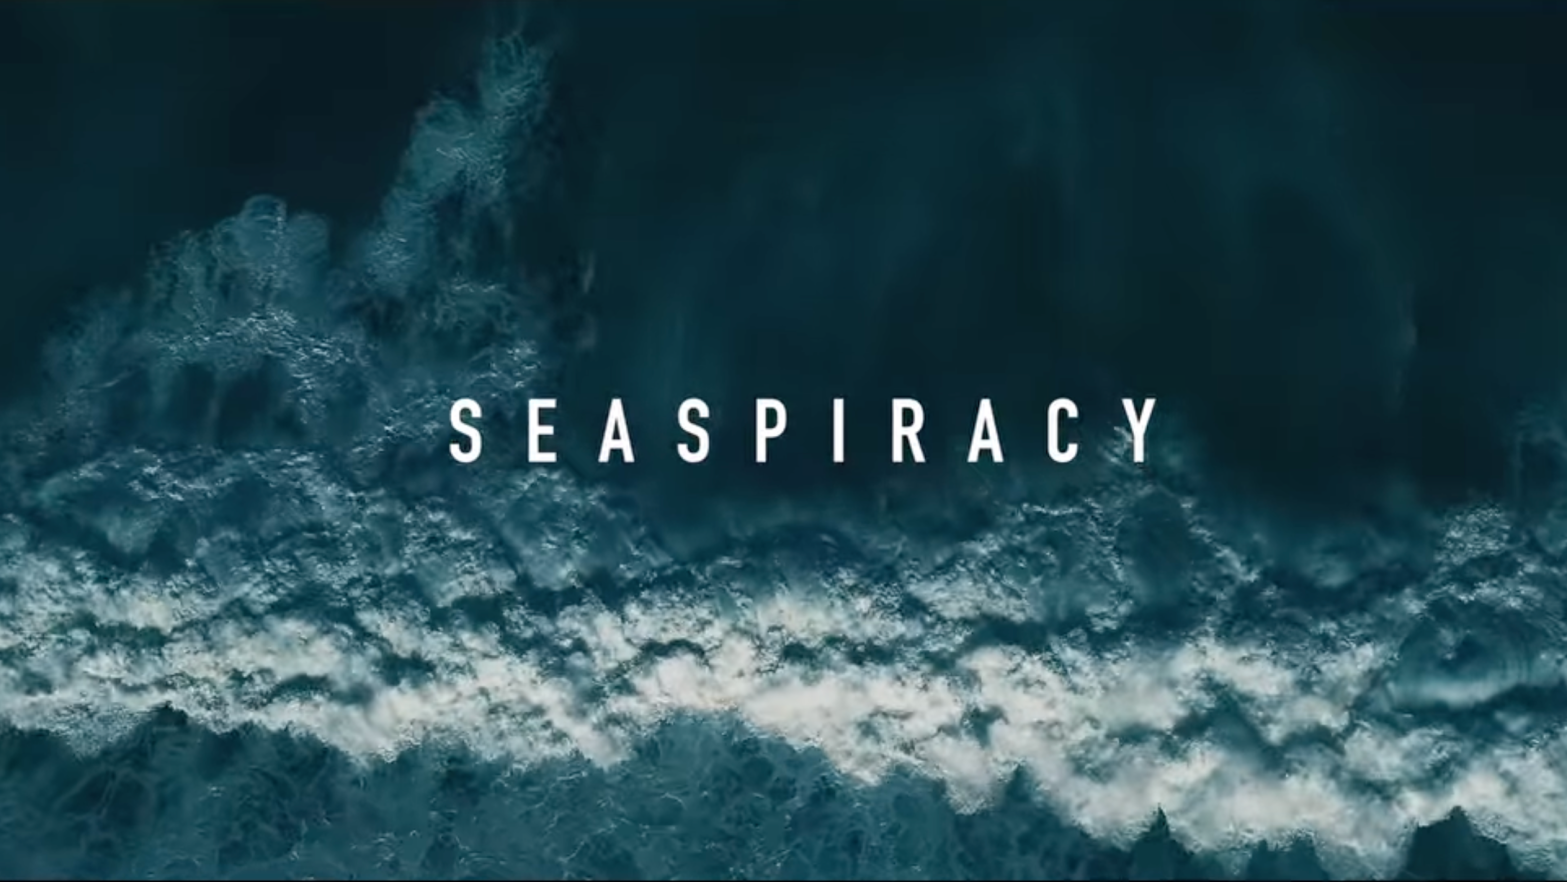 A film still from Seaspiracy. (Image: Gizmodo, Fair Use)